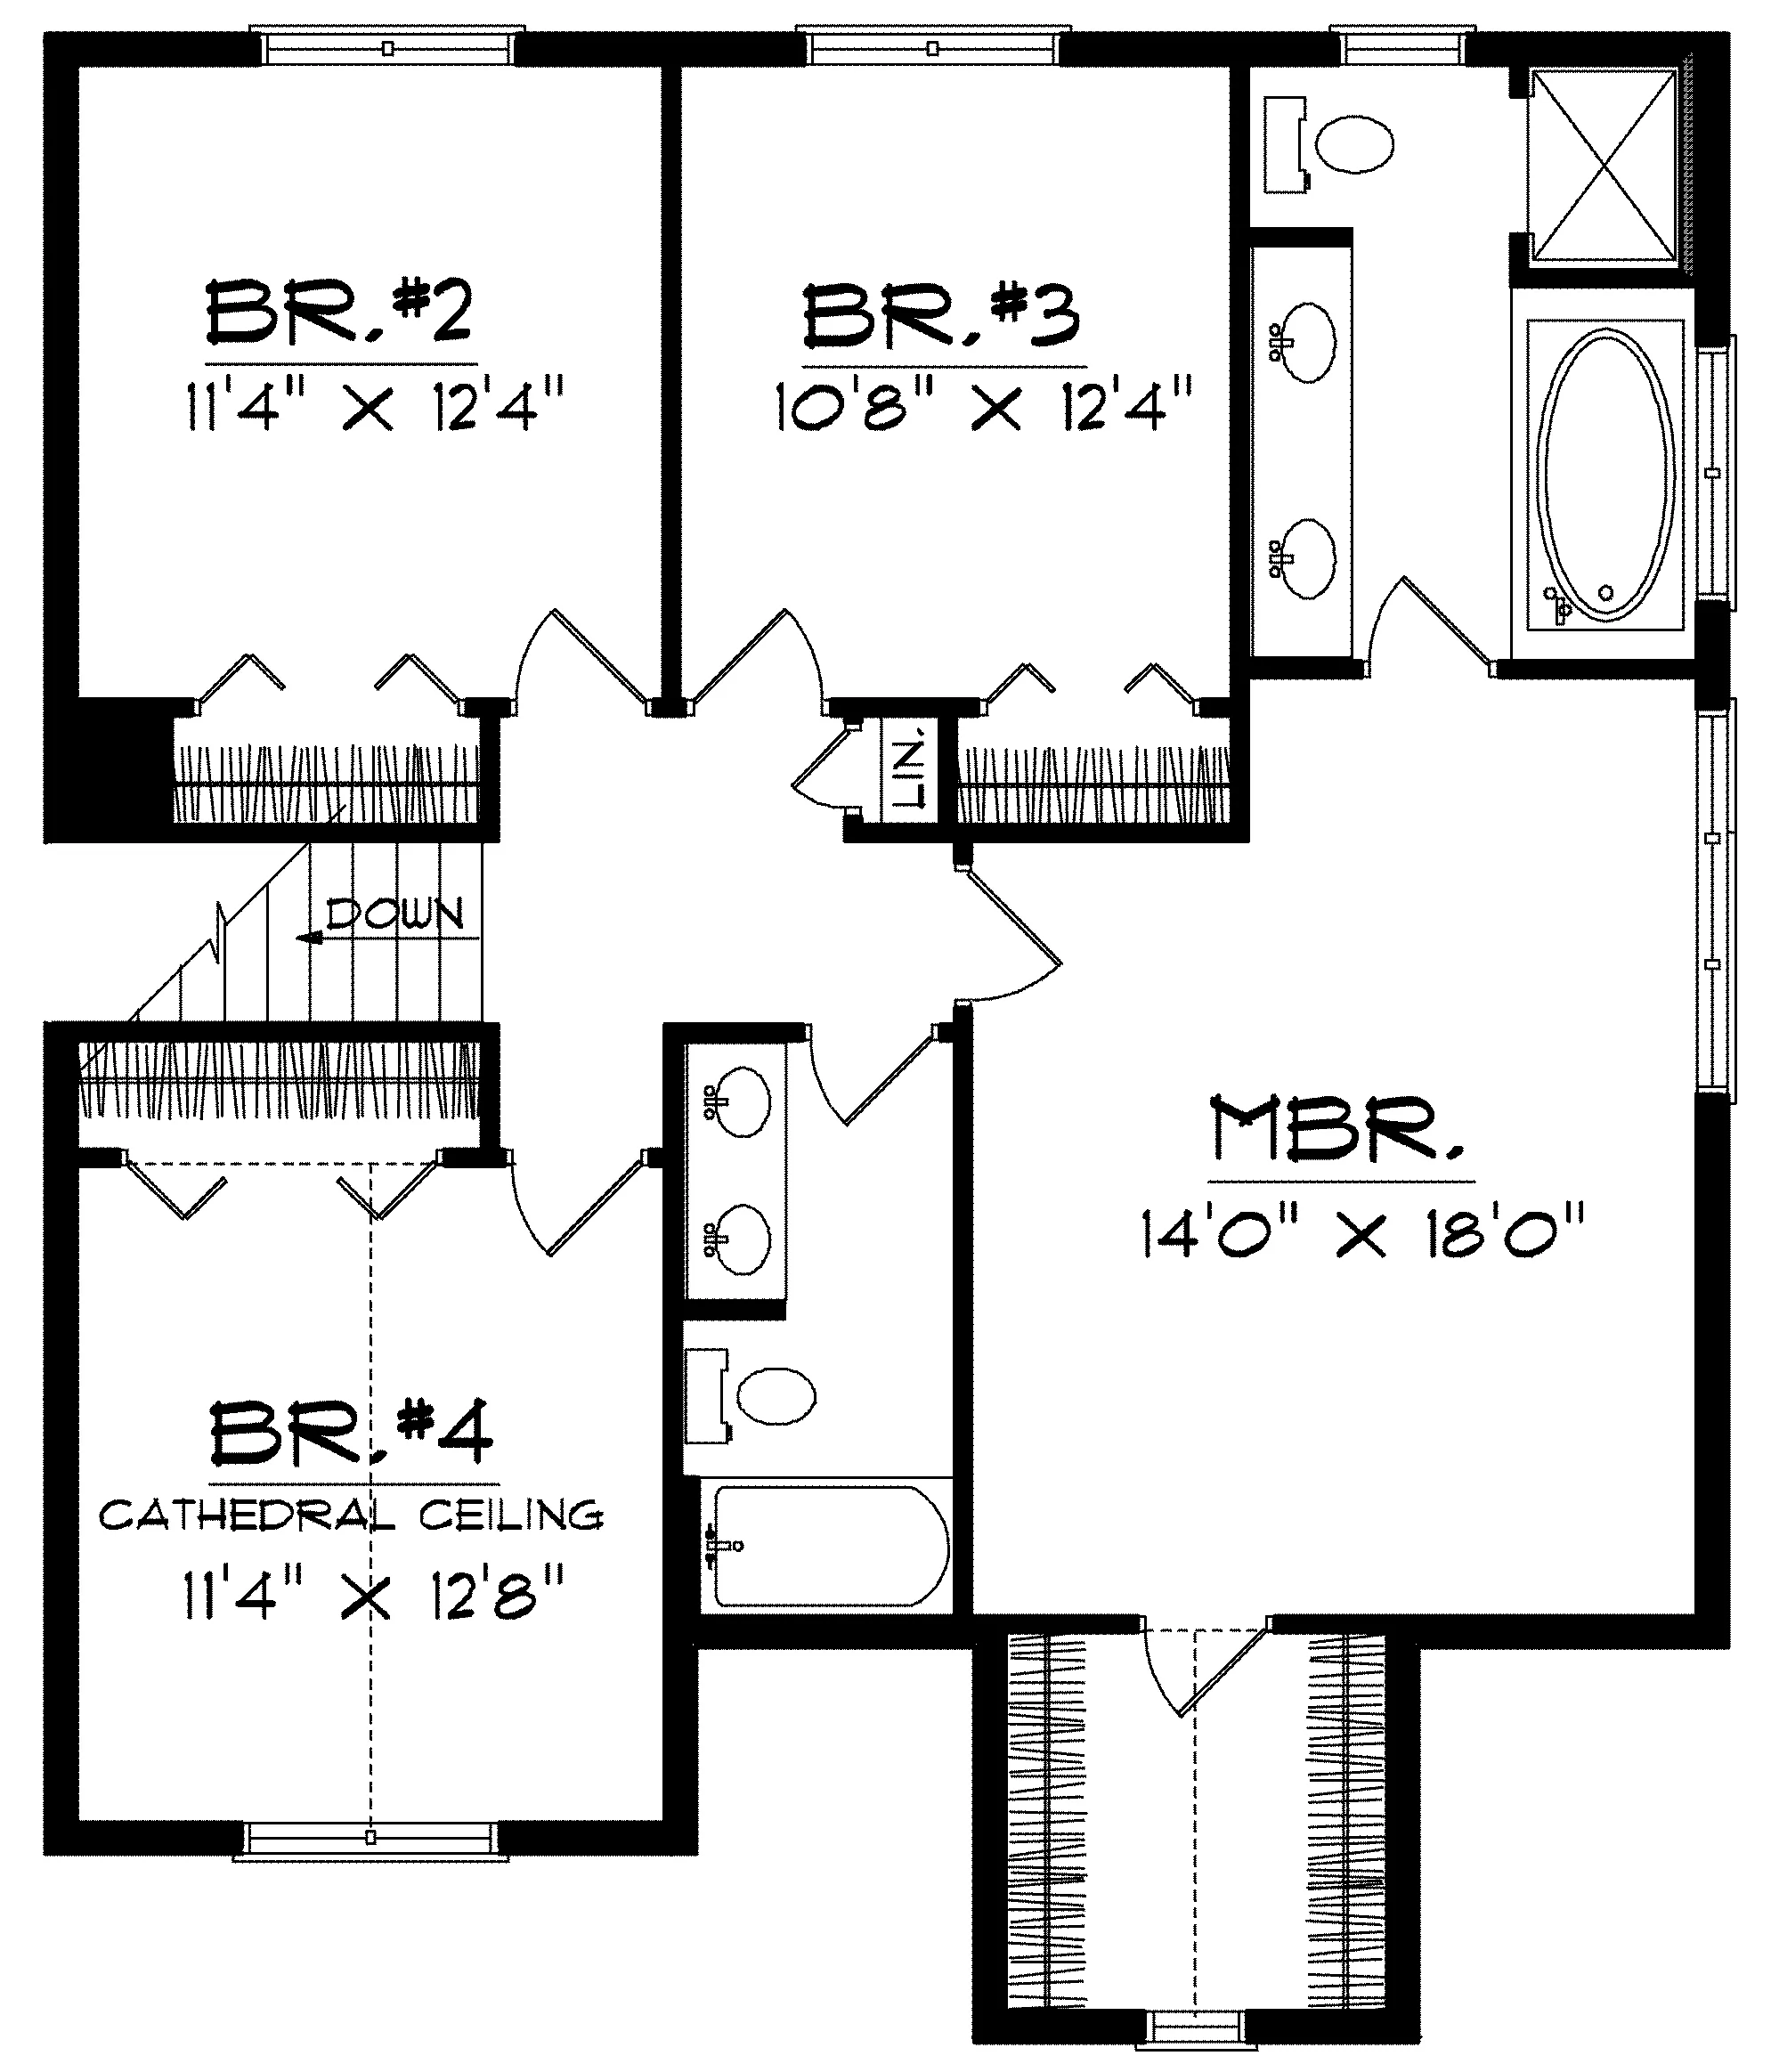 Traditional House Plan Second Floor - Abner Farm Traditional Home 051D-0143 - Search House Plans and More